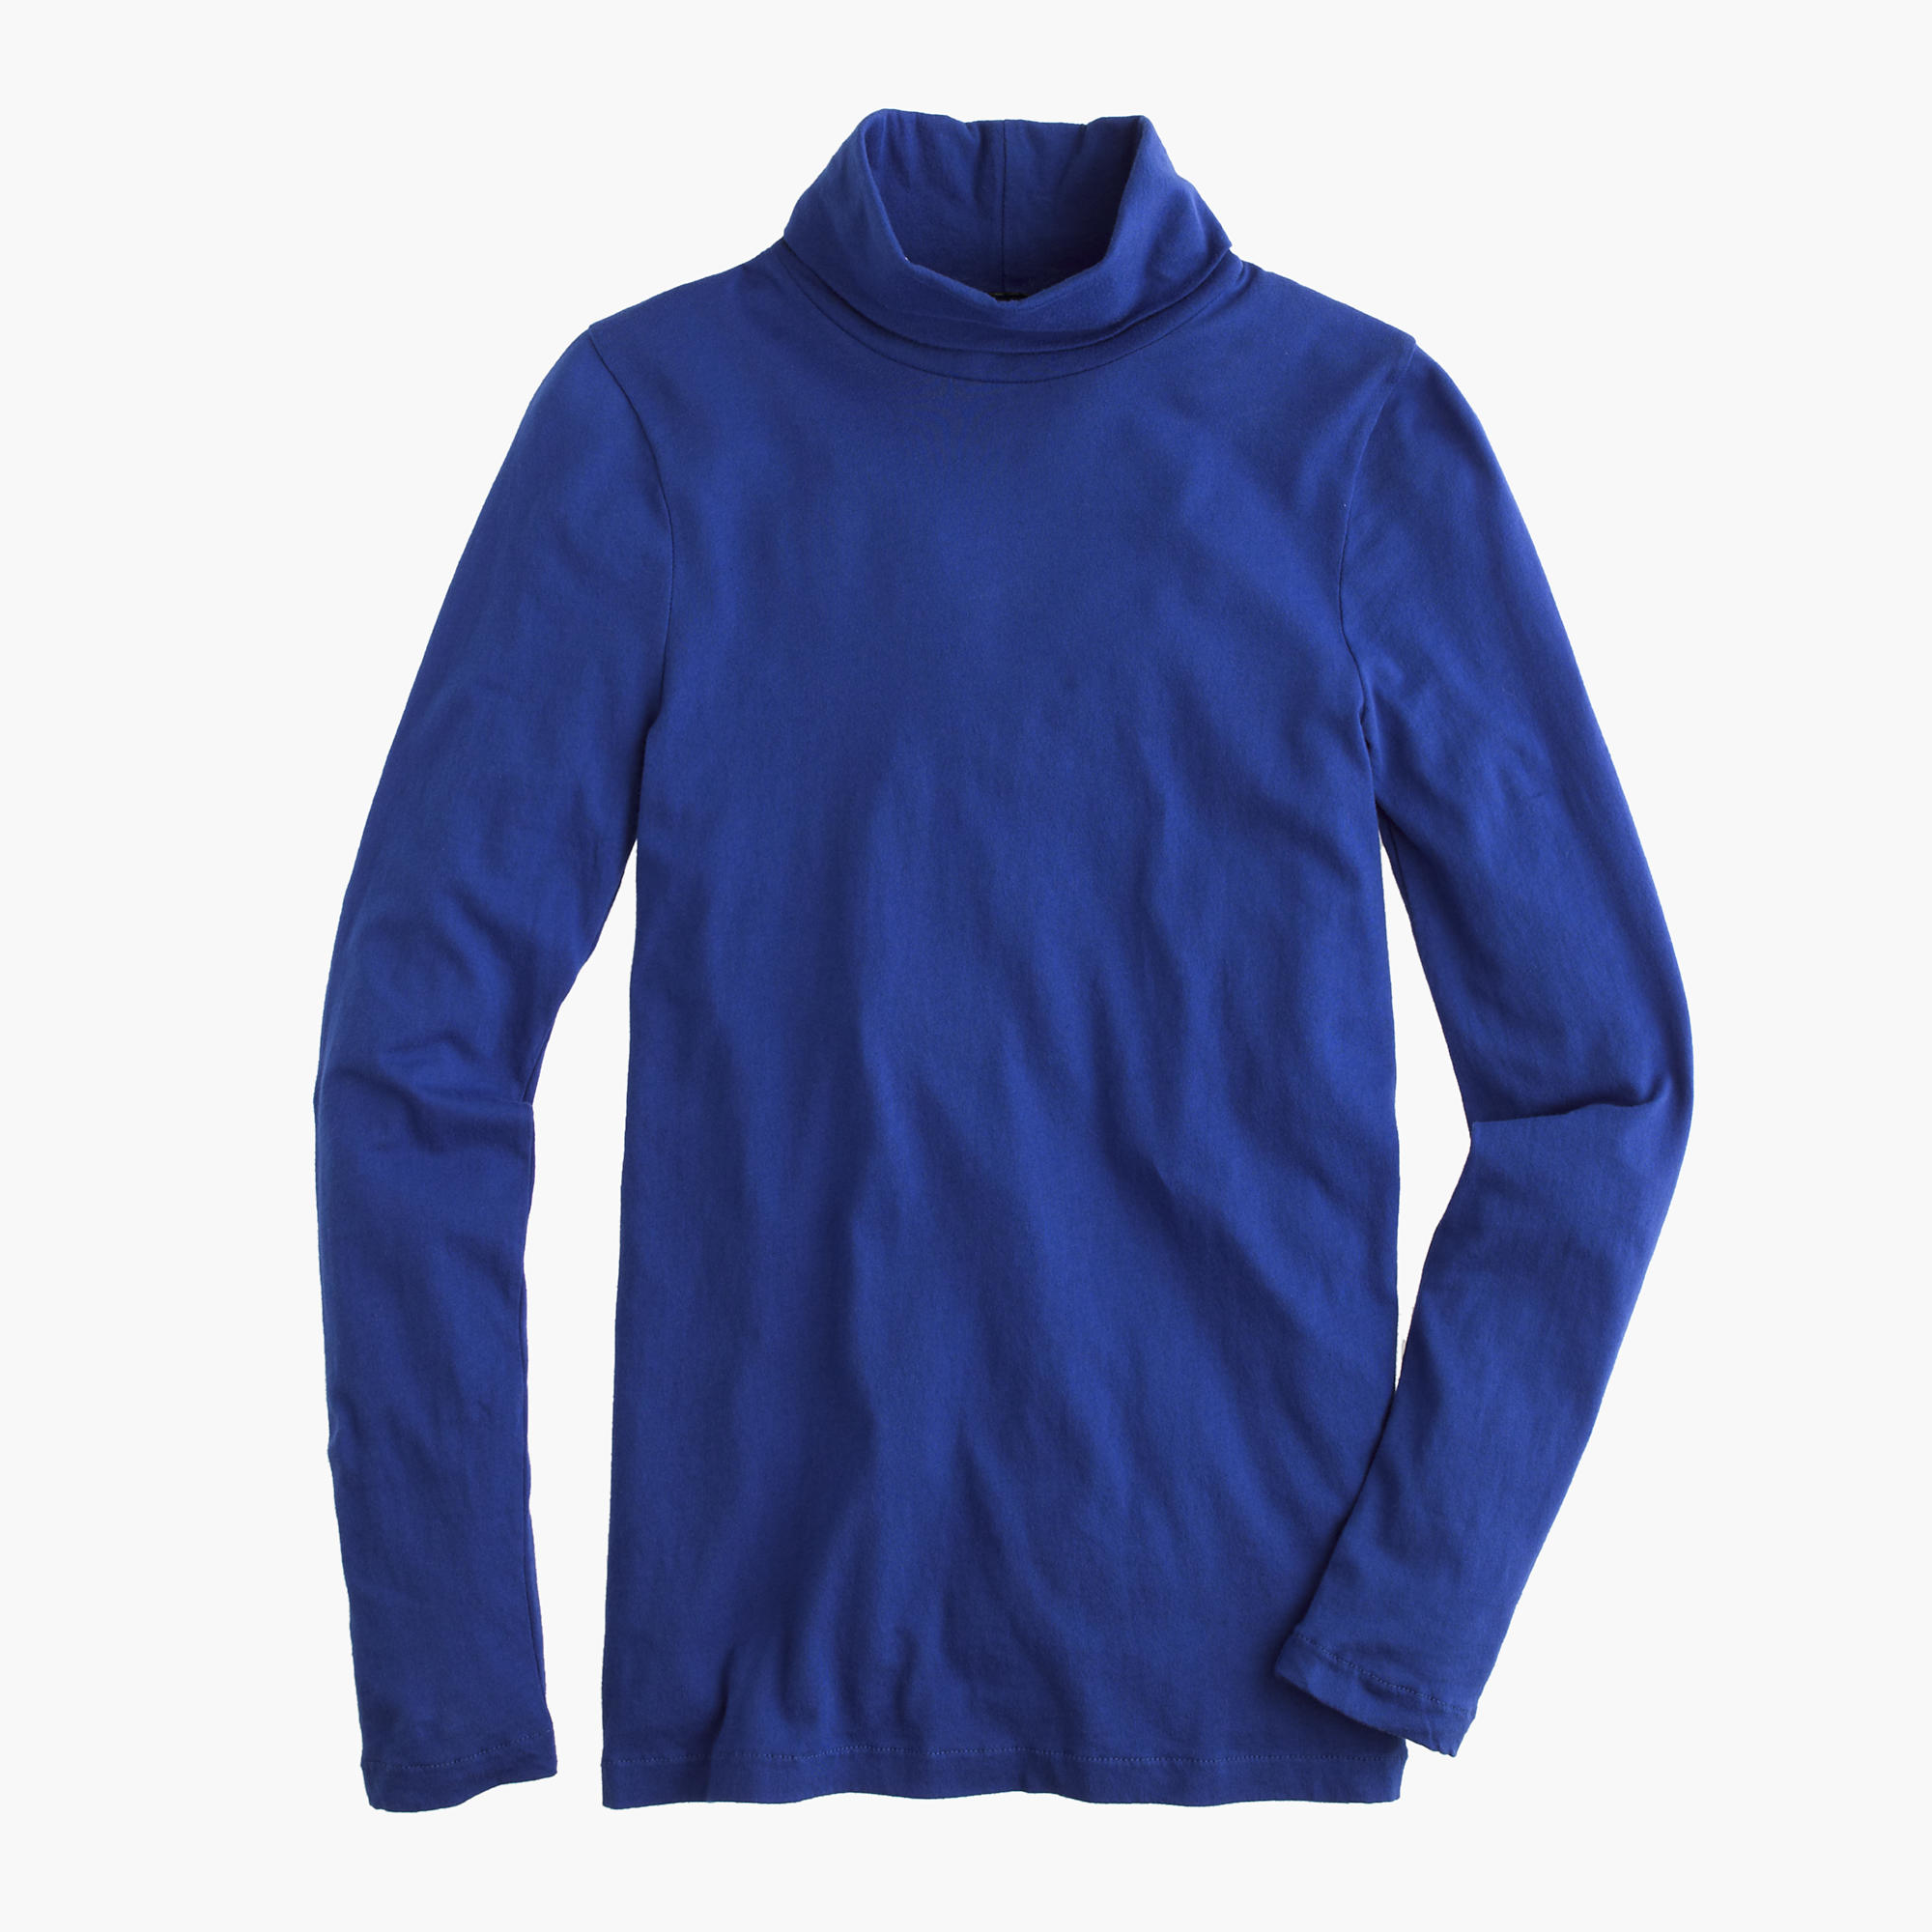 J.crew Tissue Turtleneck T-shirt in Blue (bright ocean) | Lyst